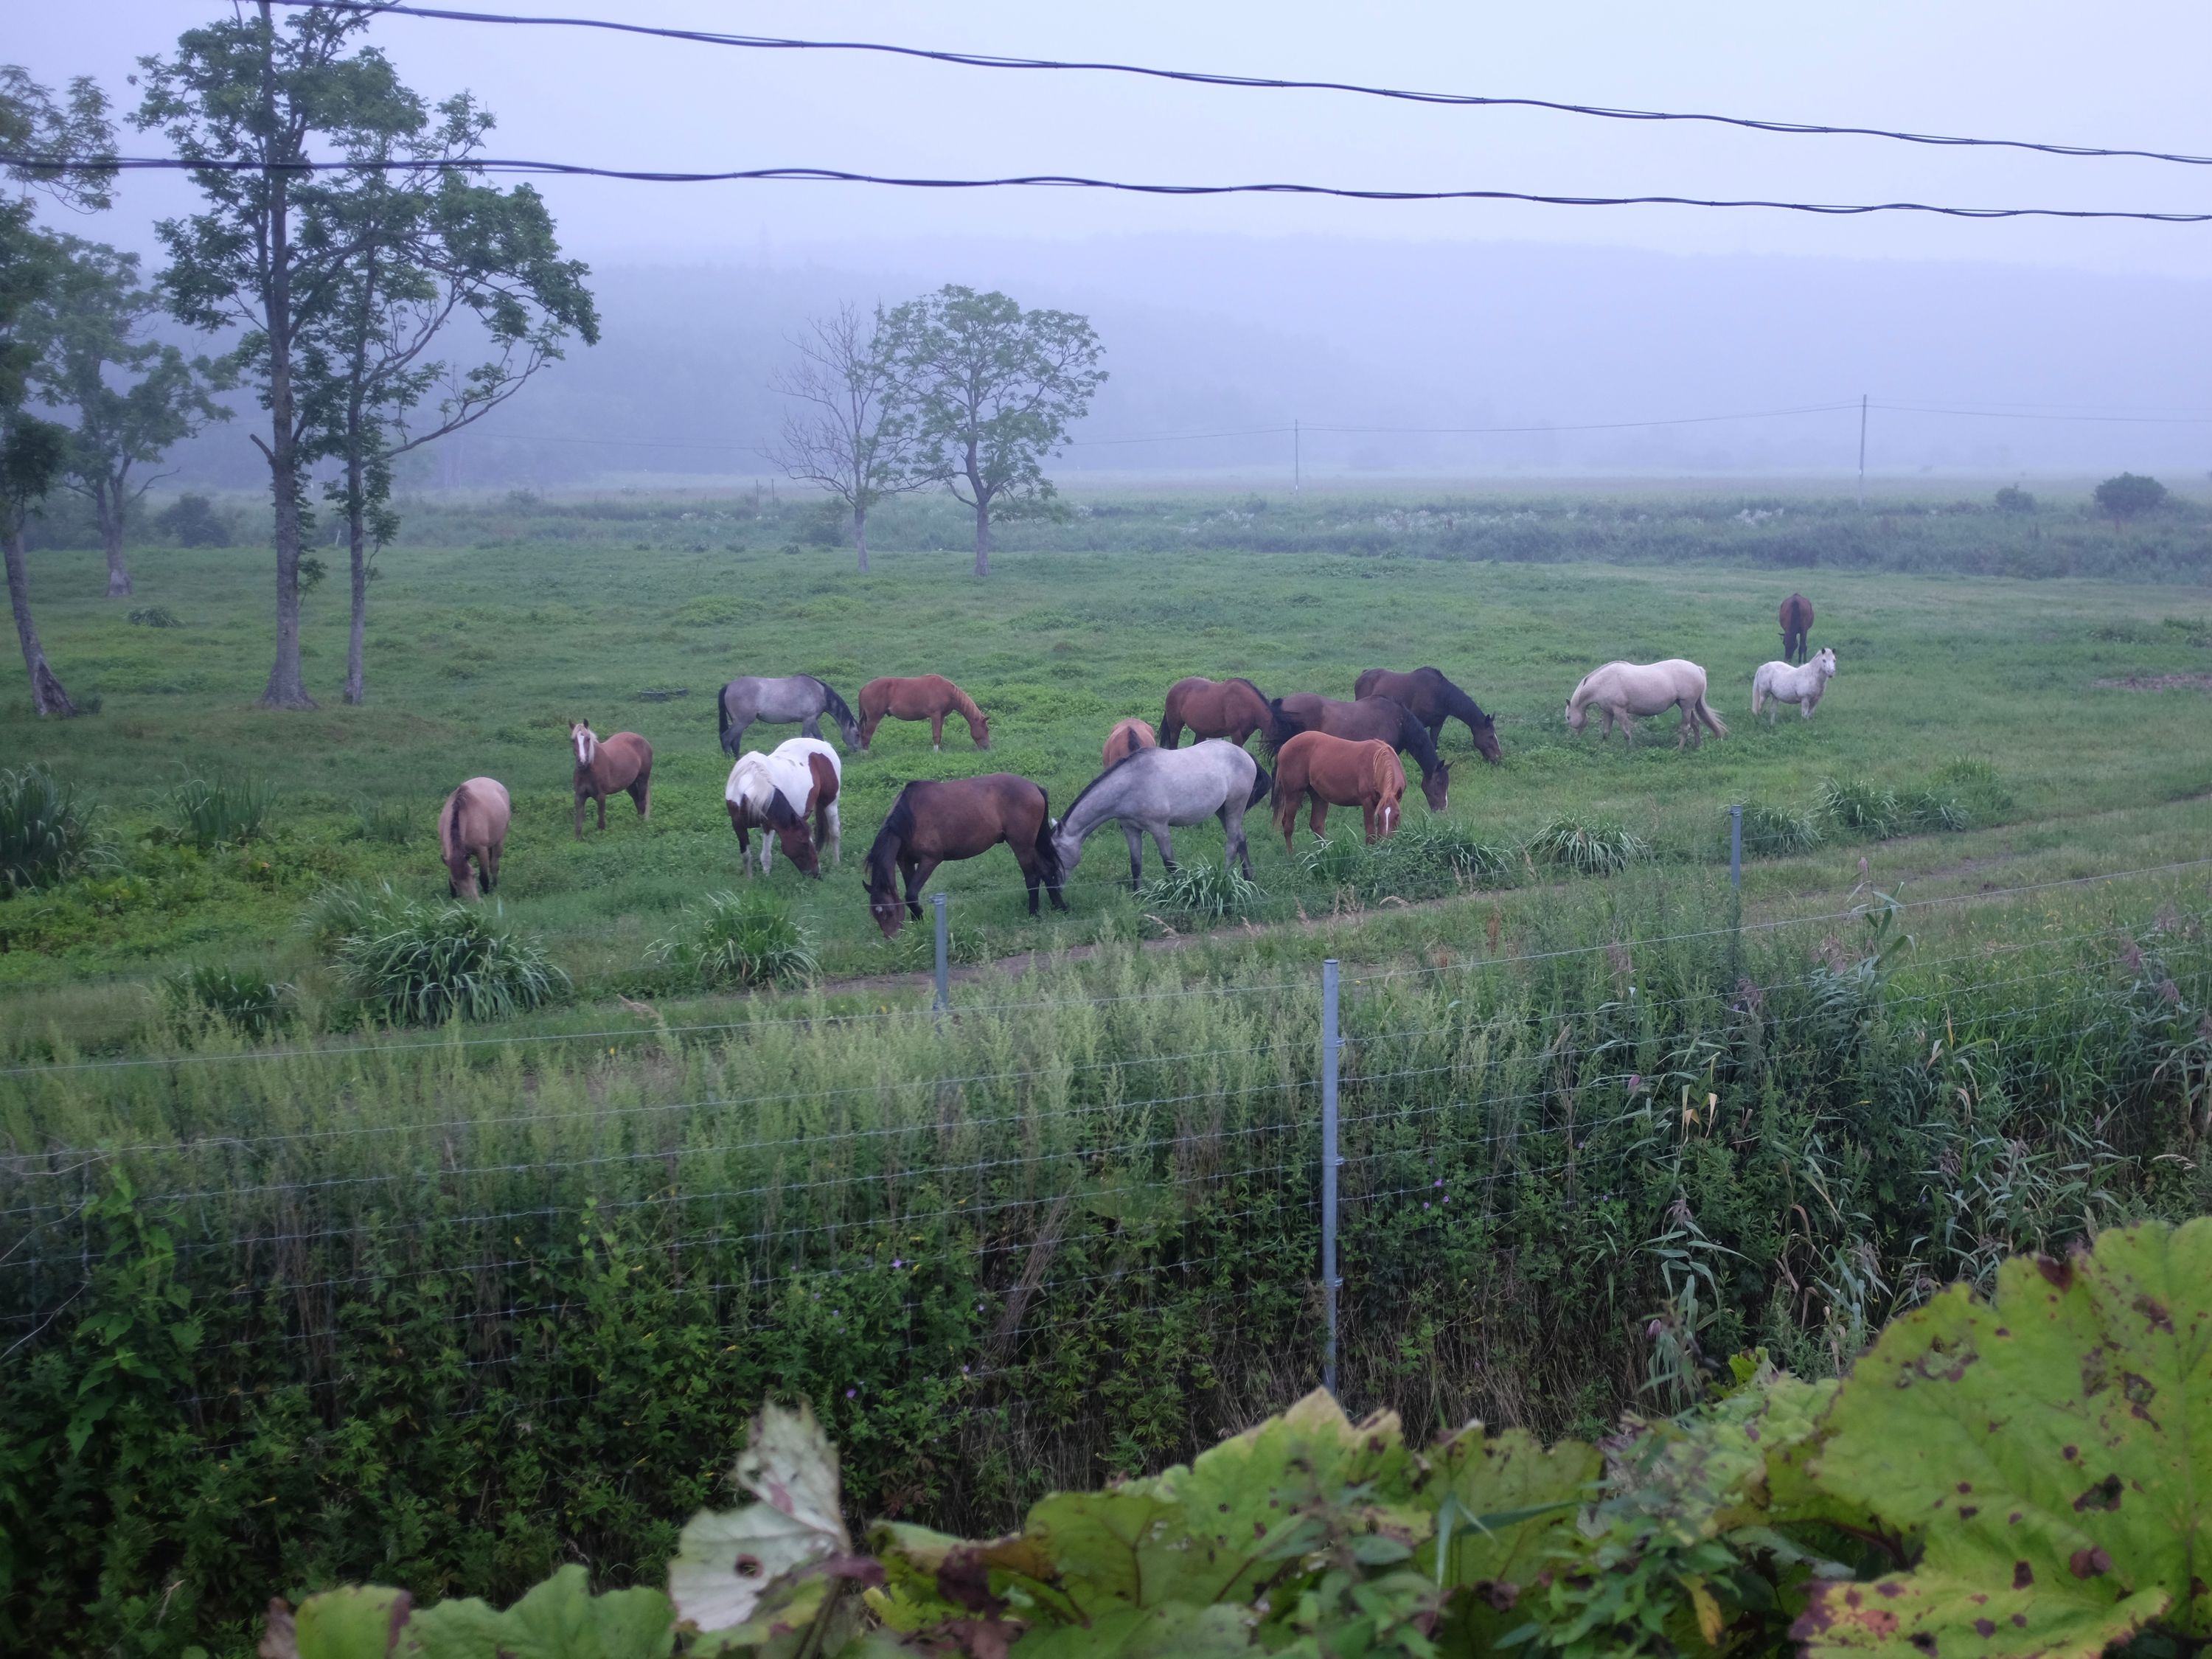 More than a dozen horses graze in a field on a foggy evening.